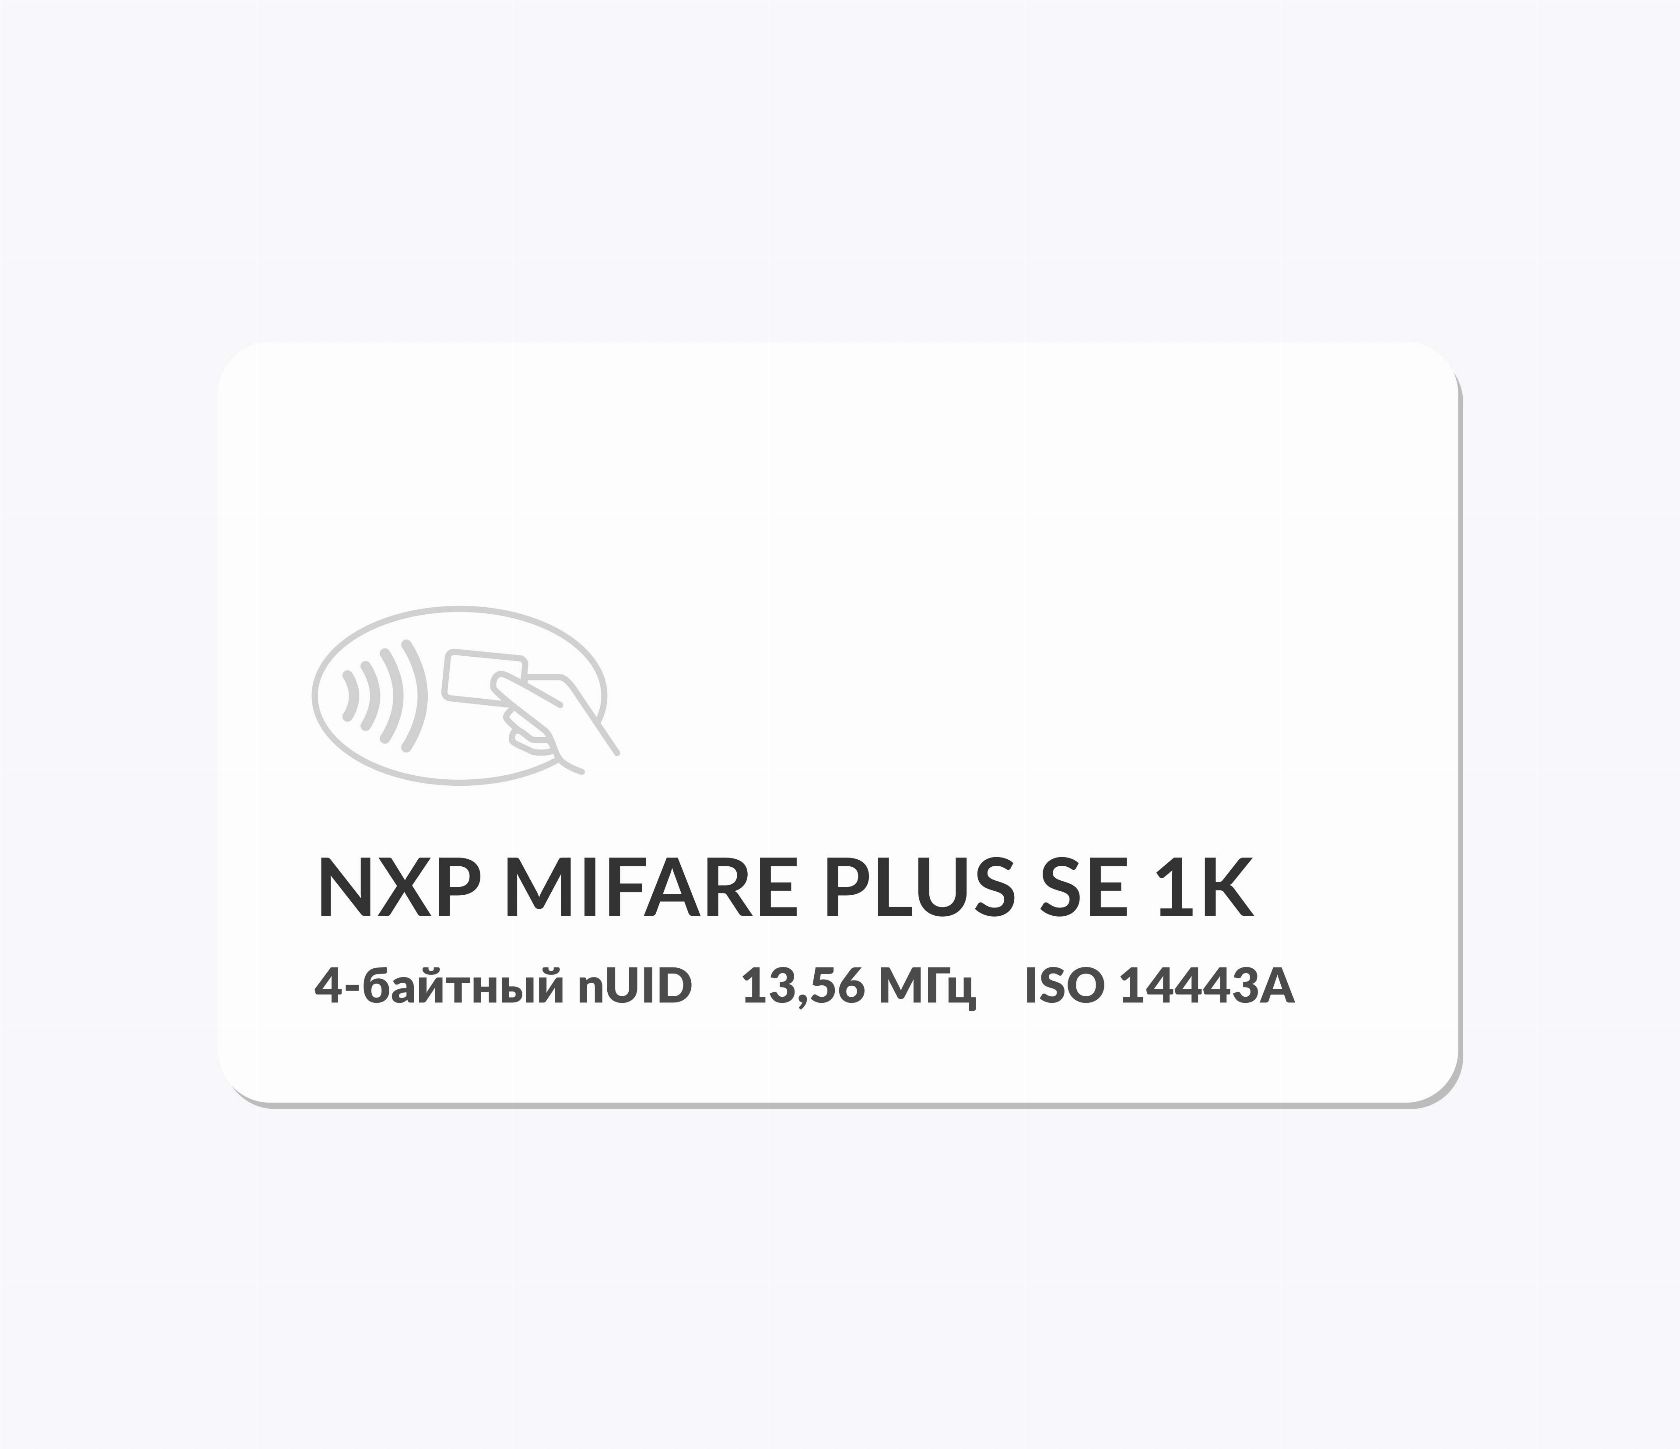 RFID-карты с чипом NXP MIFARE Plus SE 1k 4 byte nUID RFID-карты с чипом NXP MIFARE Plus SE 1k 4 byte nUID